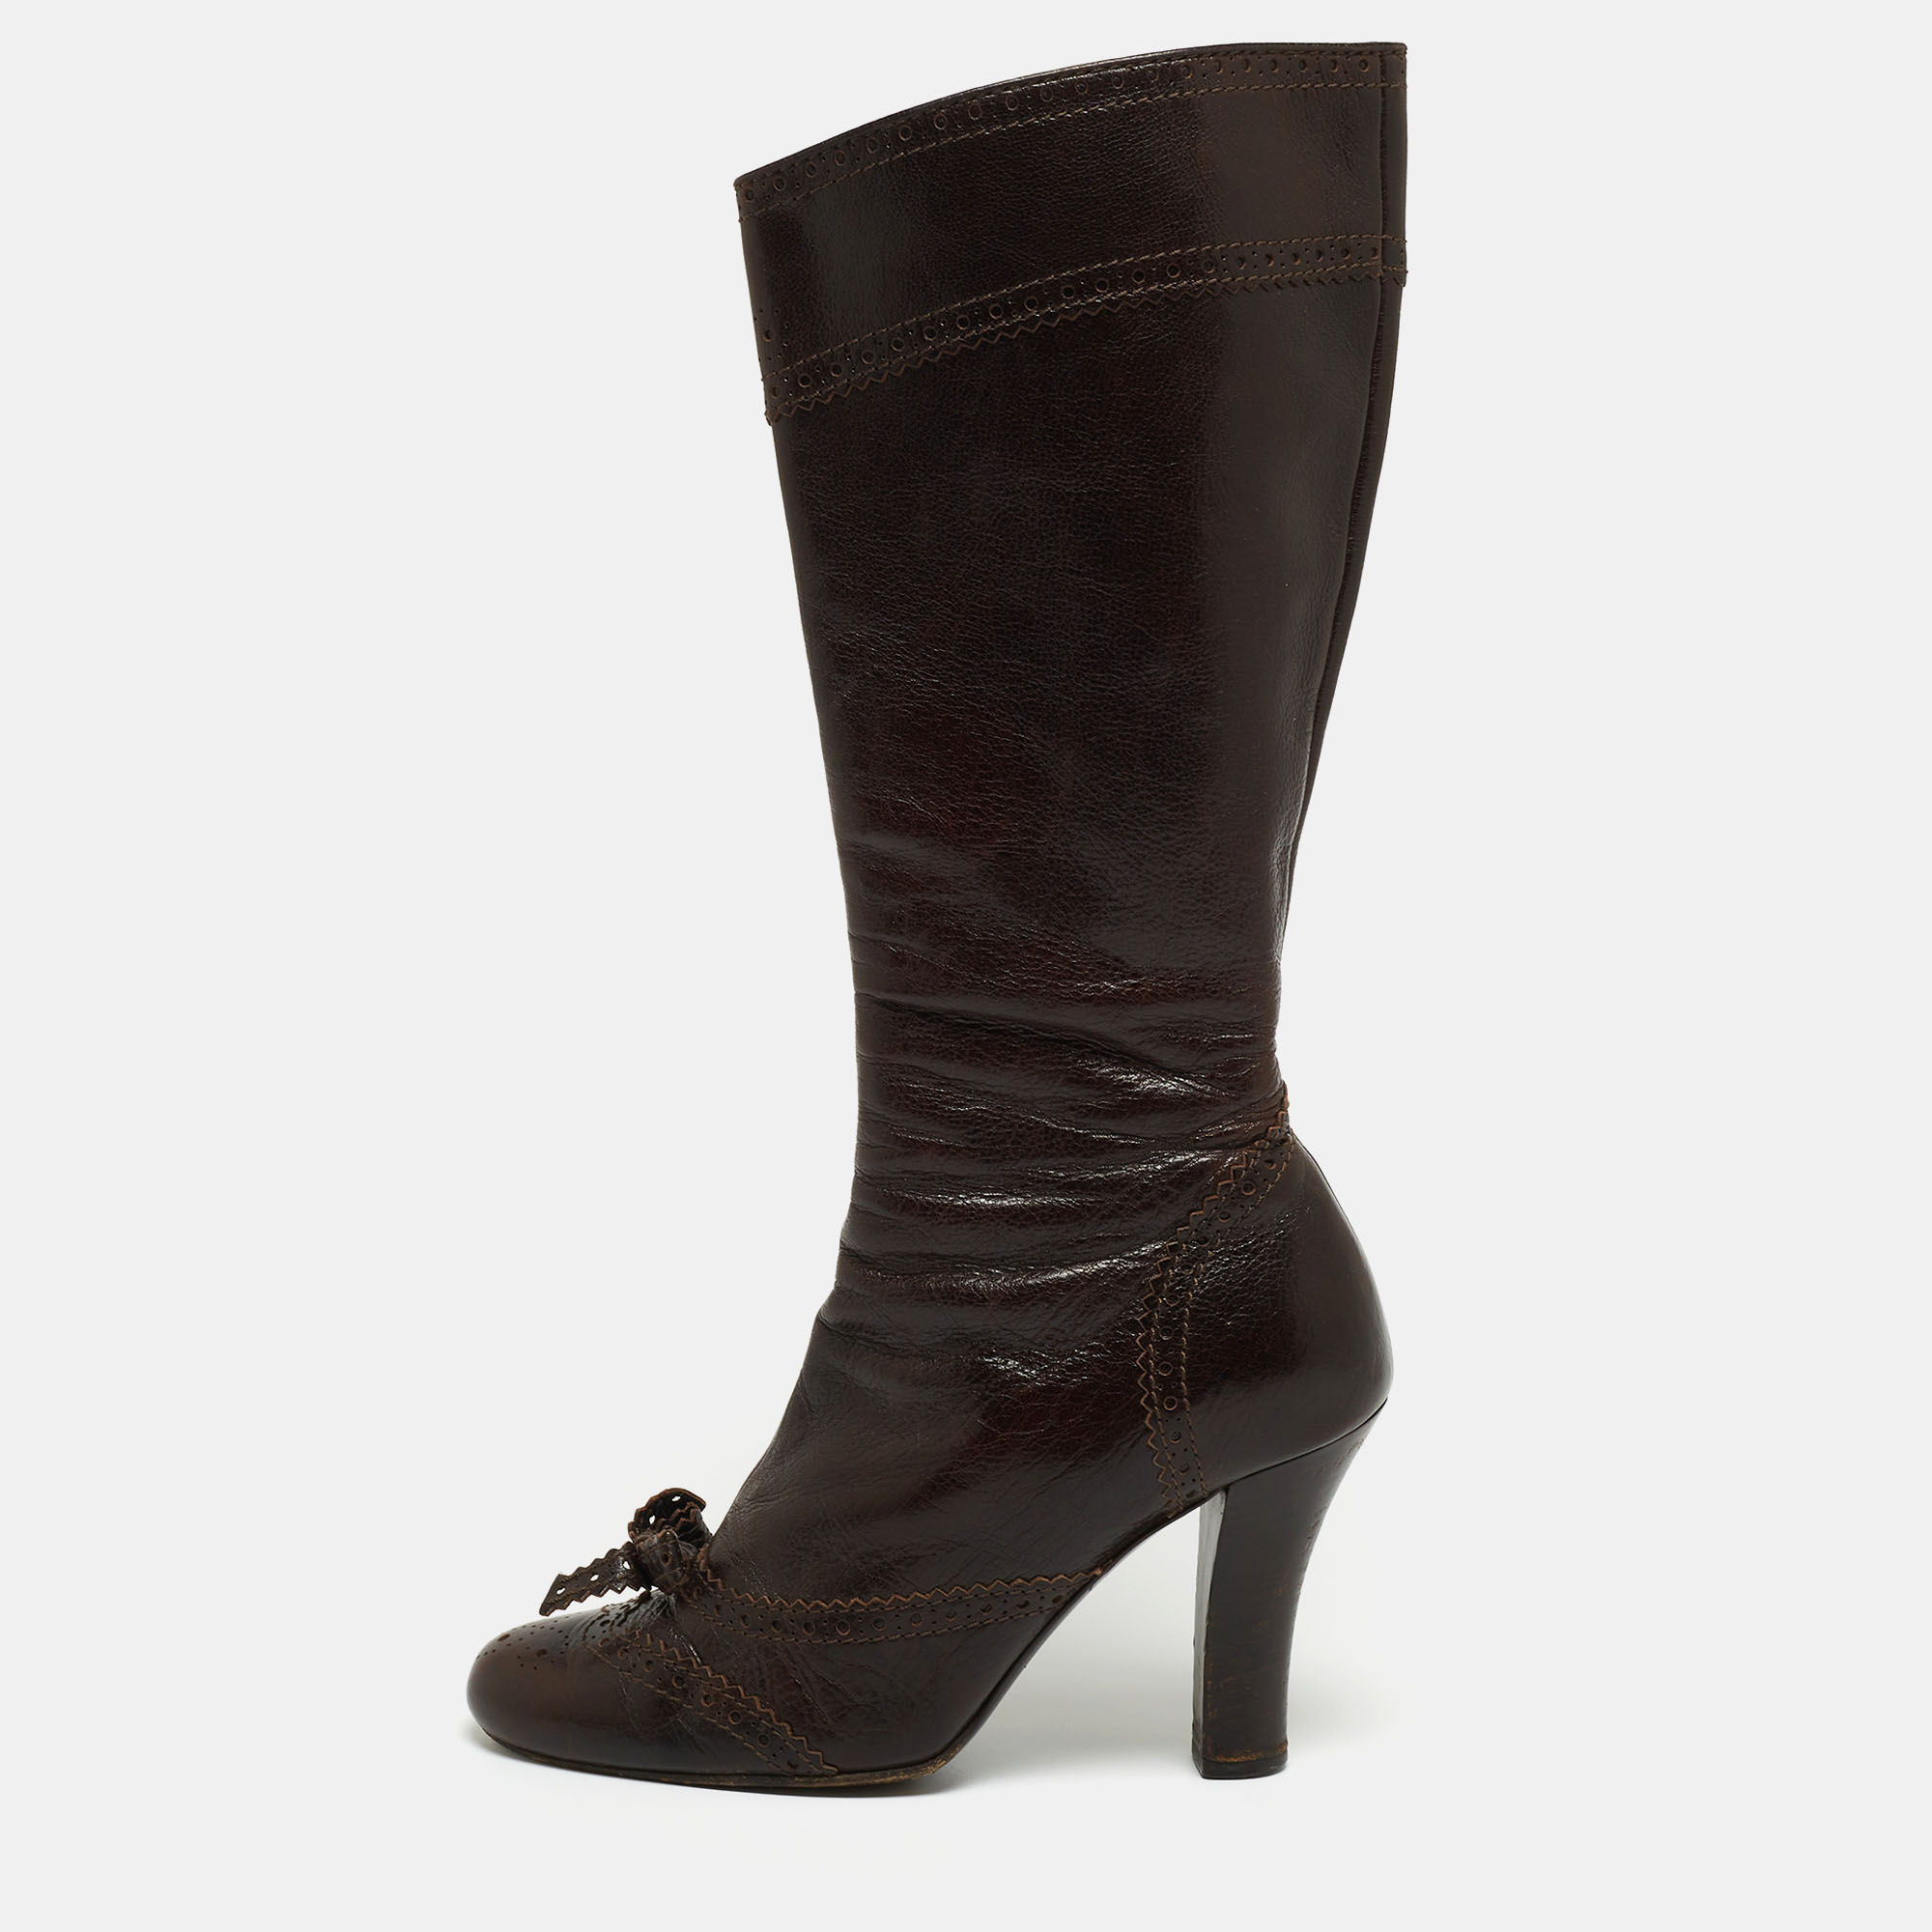 Miu Miu Brown Leather Mid Calf Boots Size 38